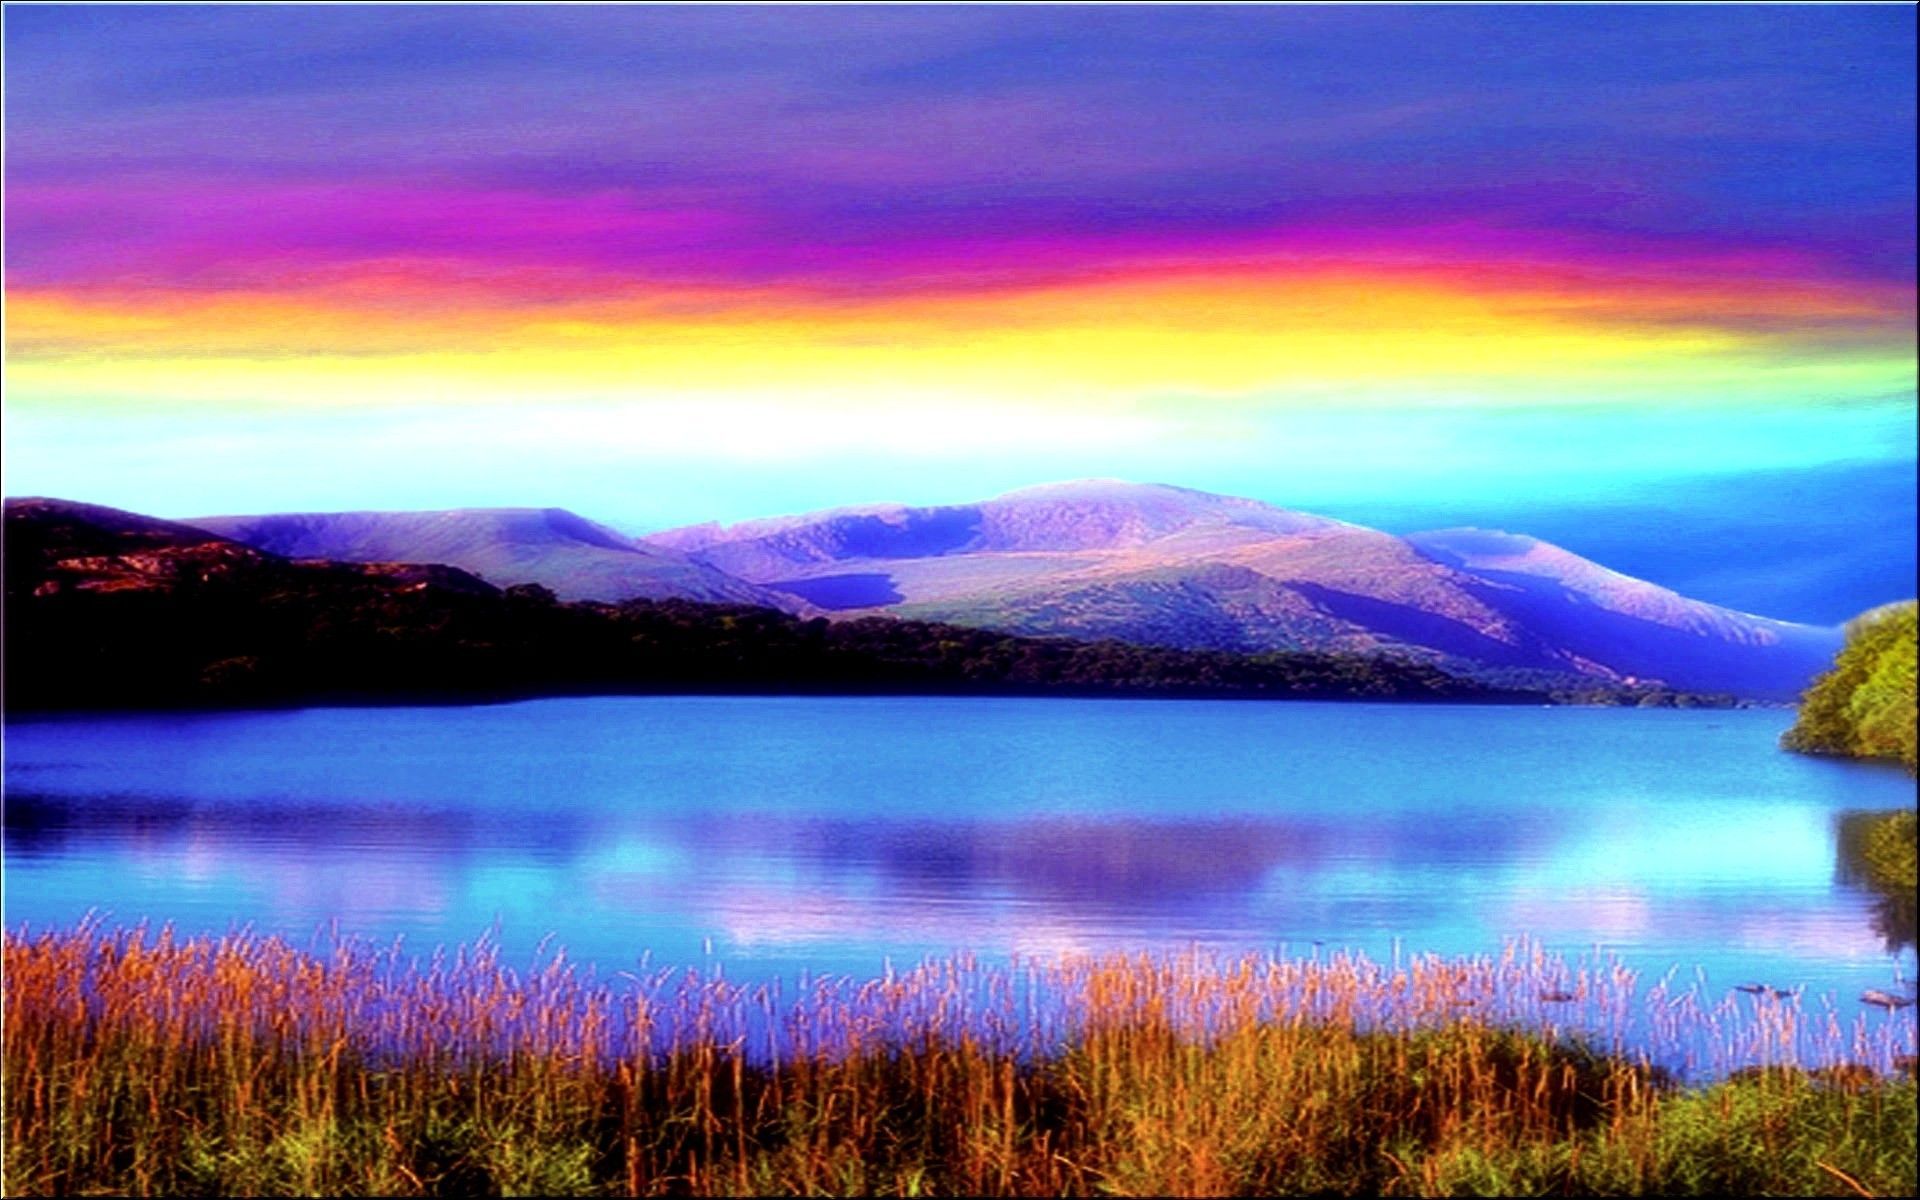 Rainbow Sky Wallpaper Free Rainbow Sky Background